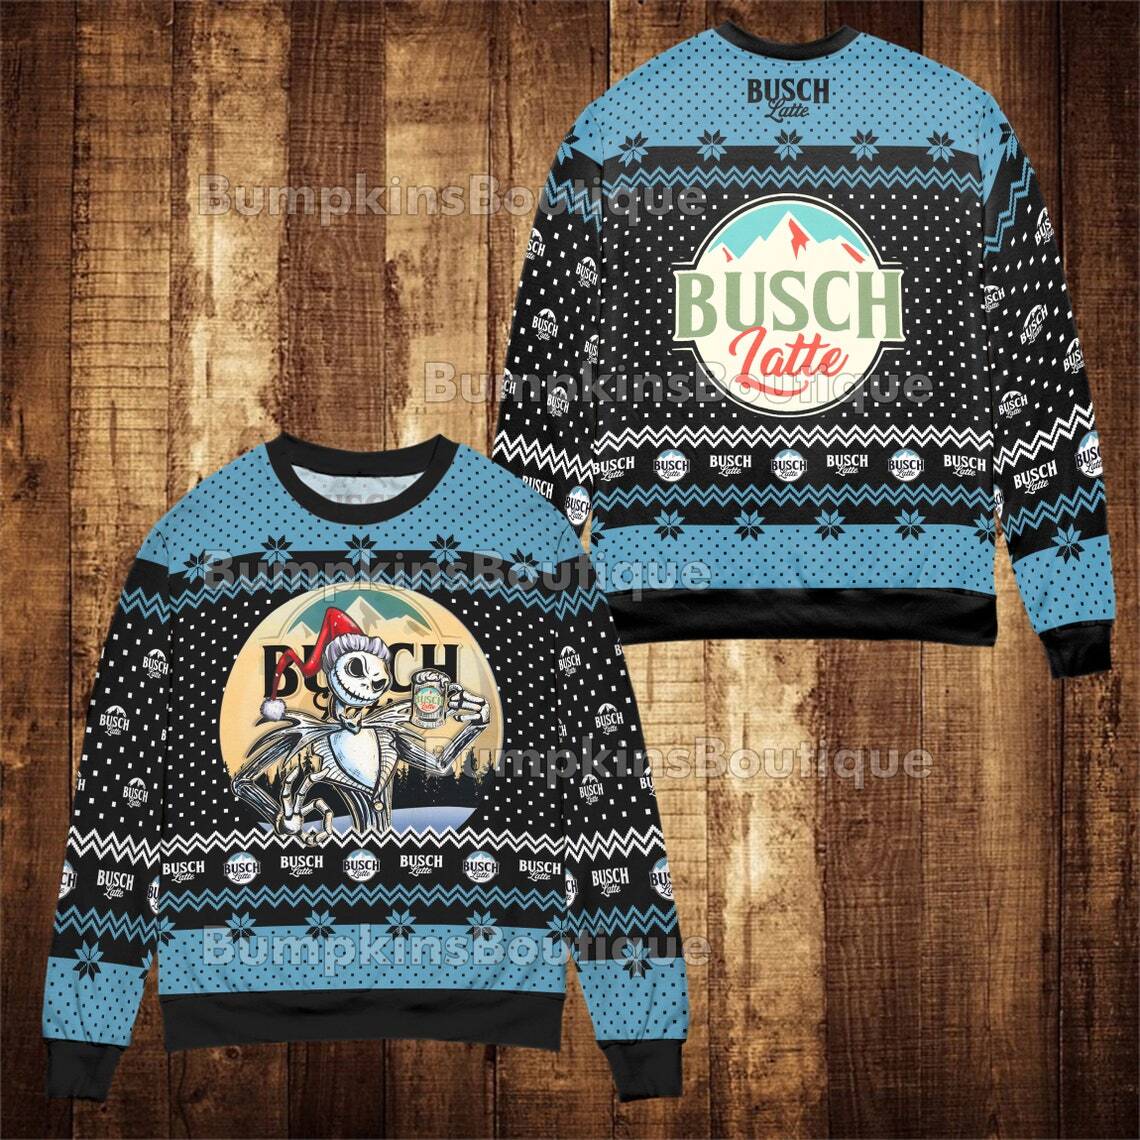 Busch Latte Ugly Christmas Sweater Jack Skellington Loves Busch